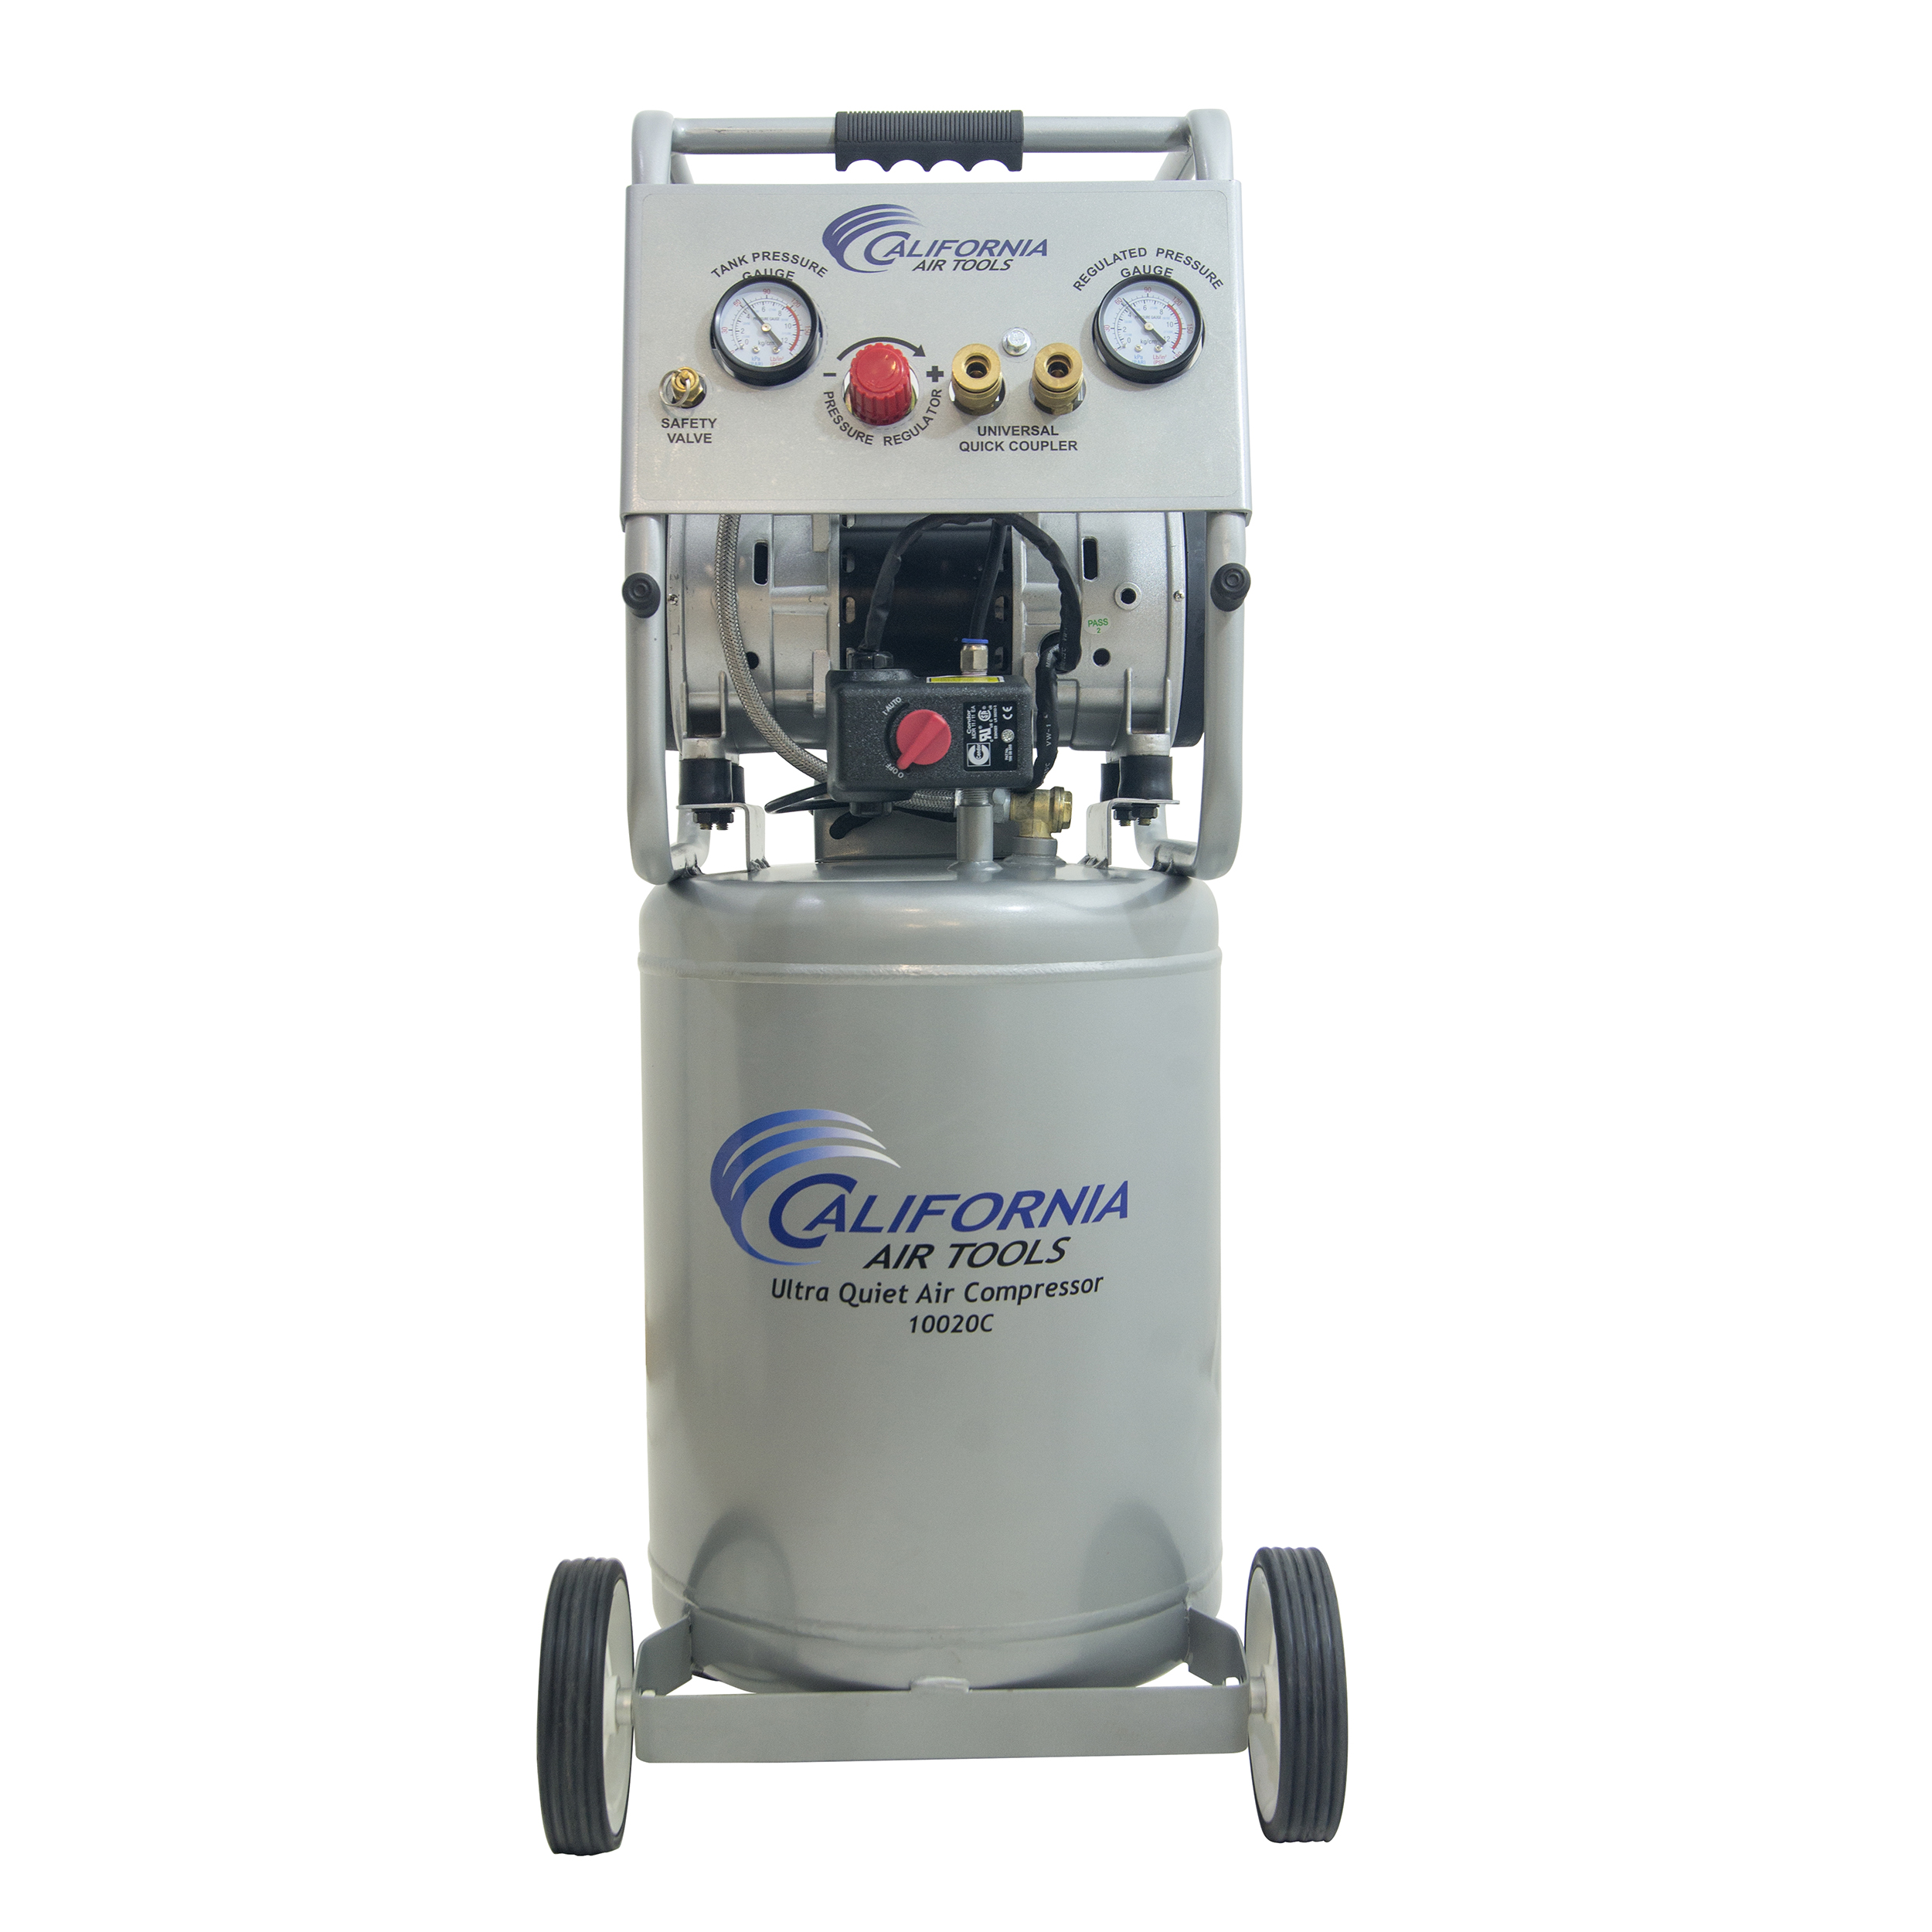 10020c-22060 Ultra Quiet Oil-free Air Compressor, 2 Hp, 10 Gal., 220v